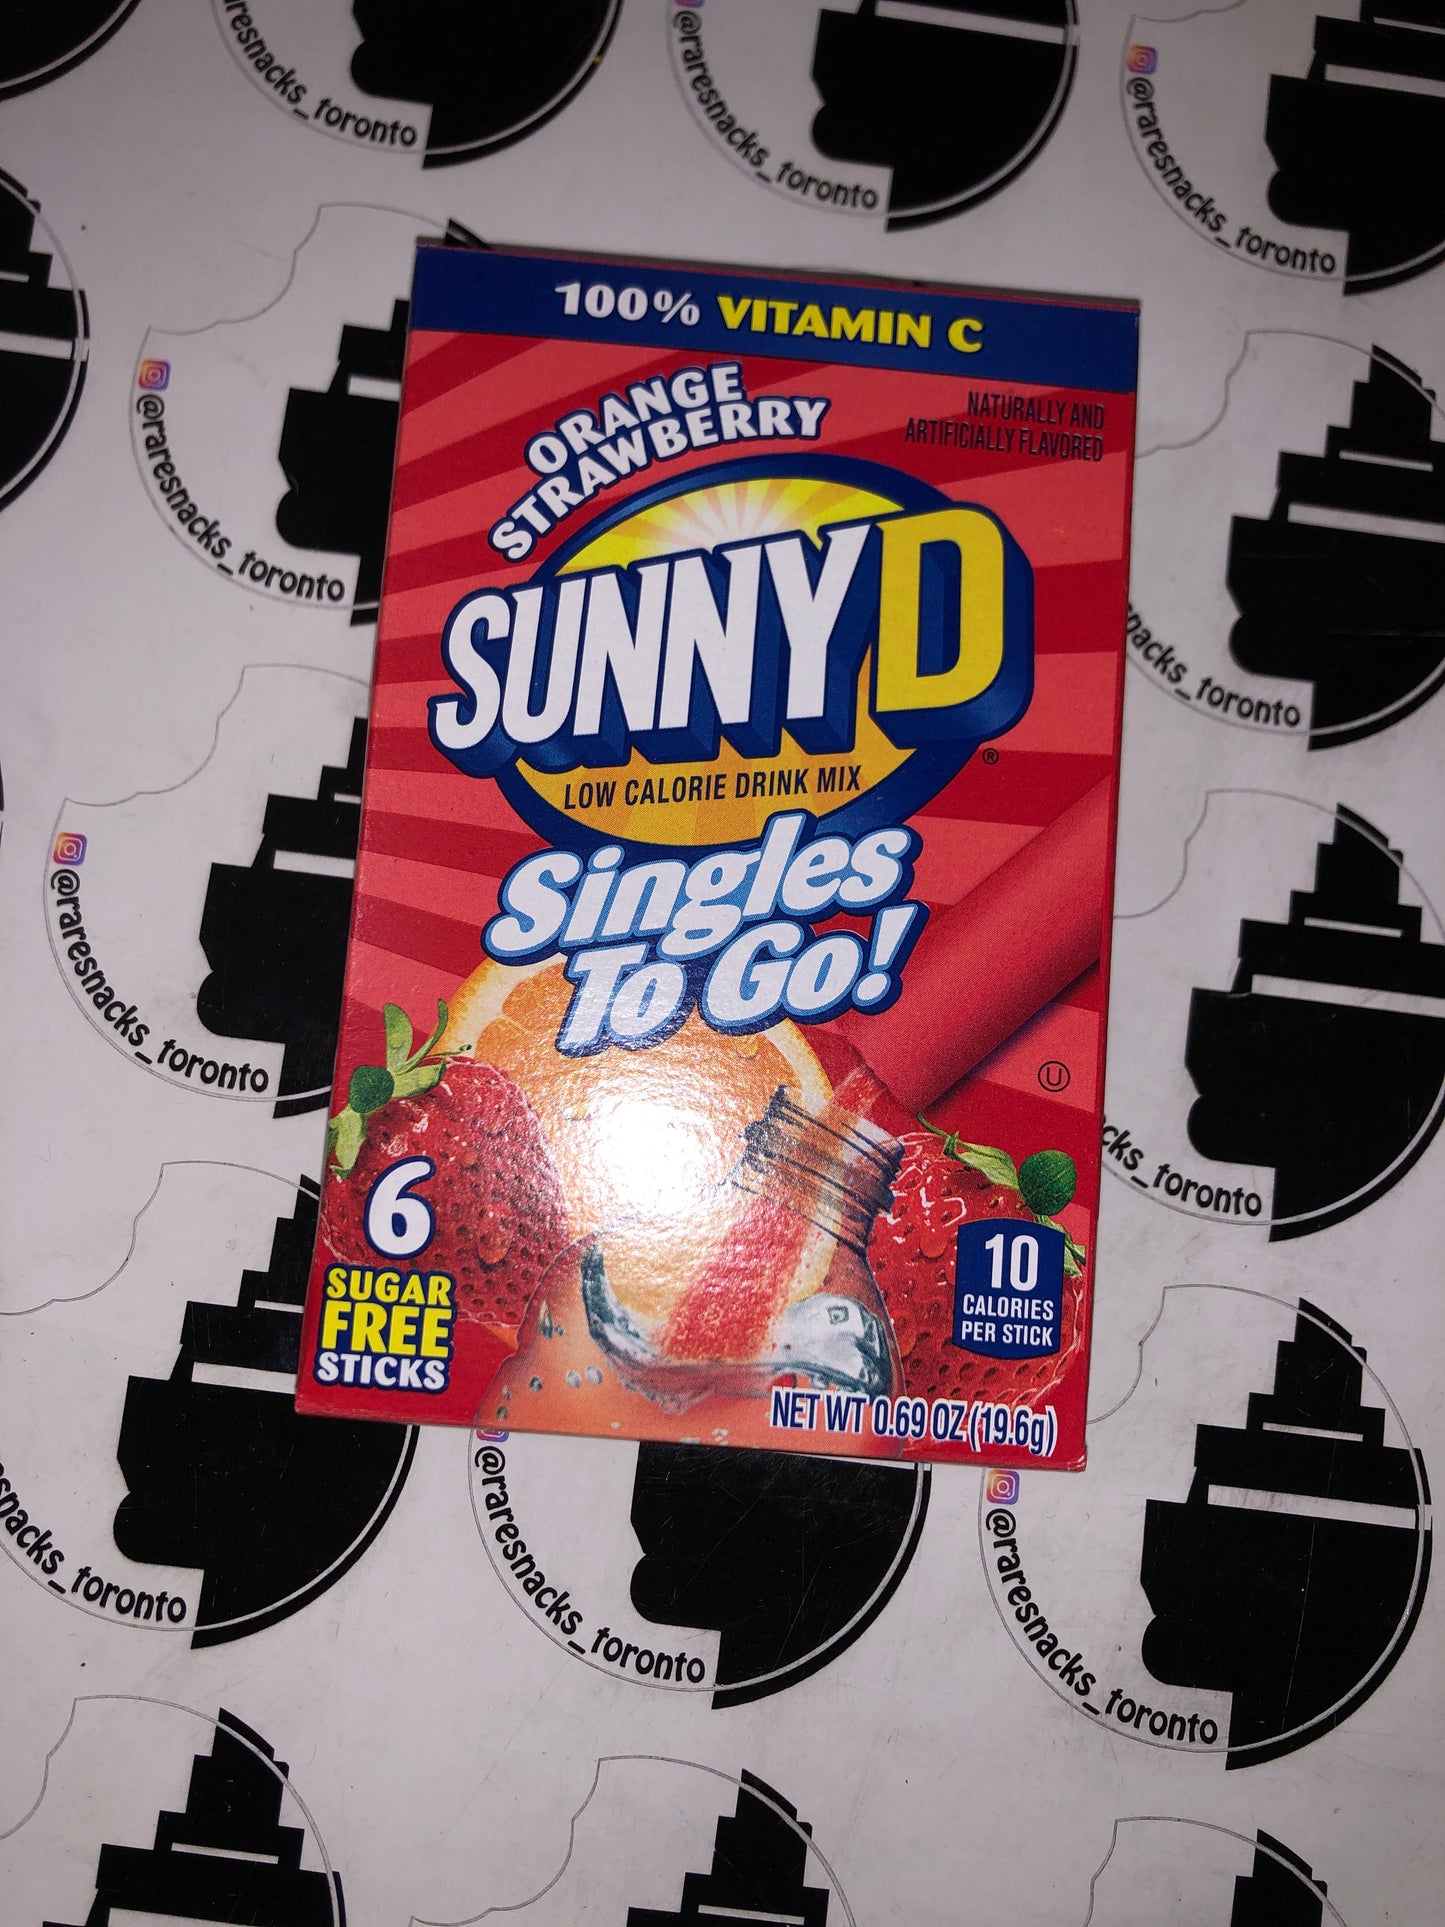 Sunny D Strawberry Orange singles to go